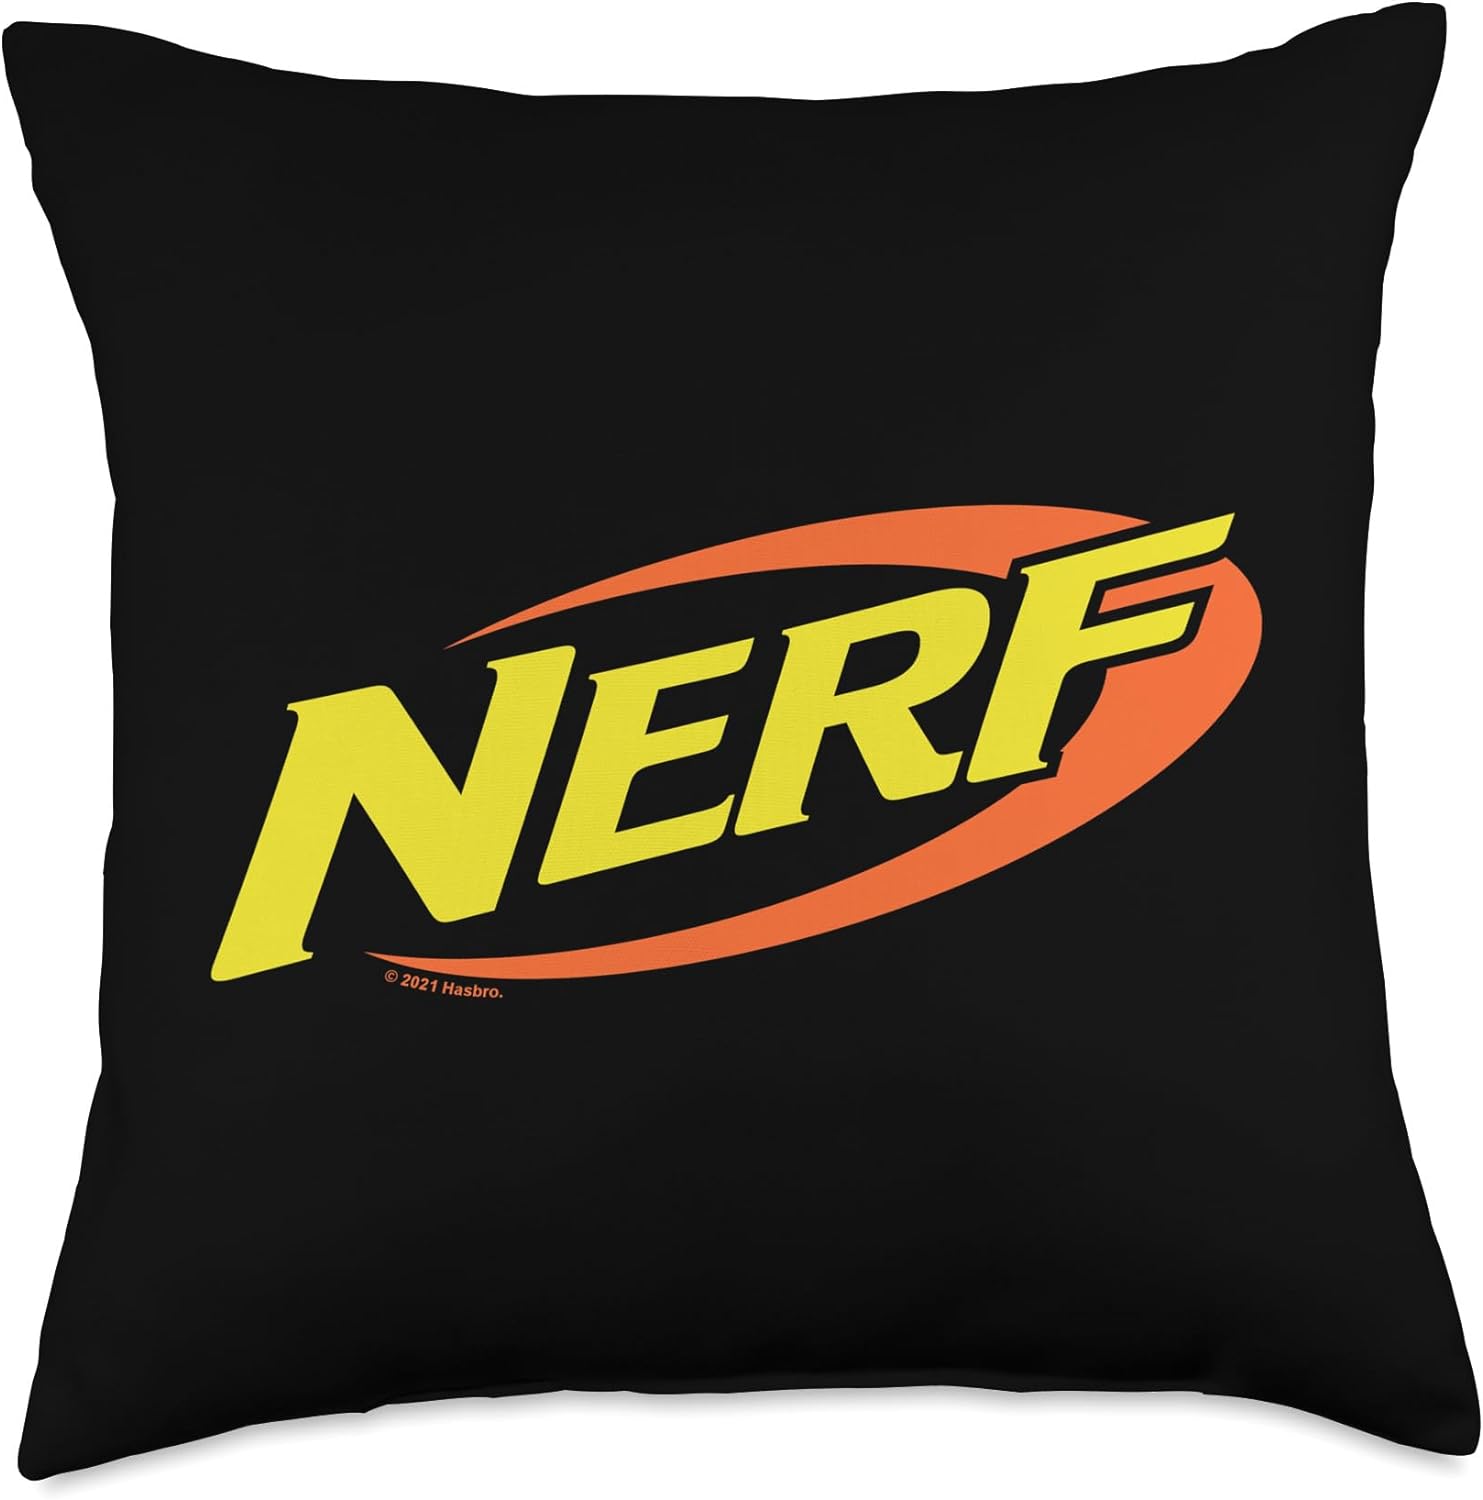 Nerf Classic Logo Throw Pillow, 18x18, Multicolor